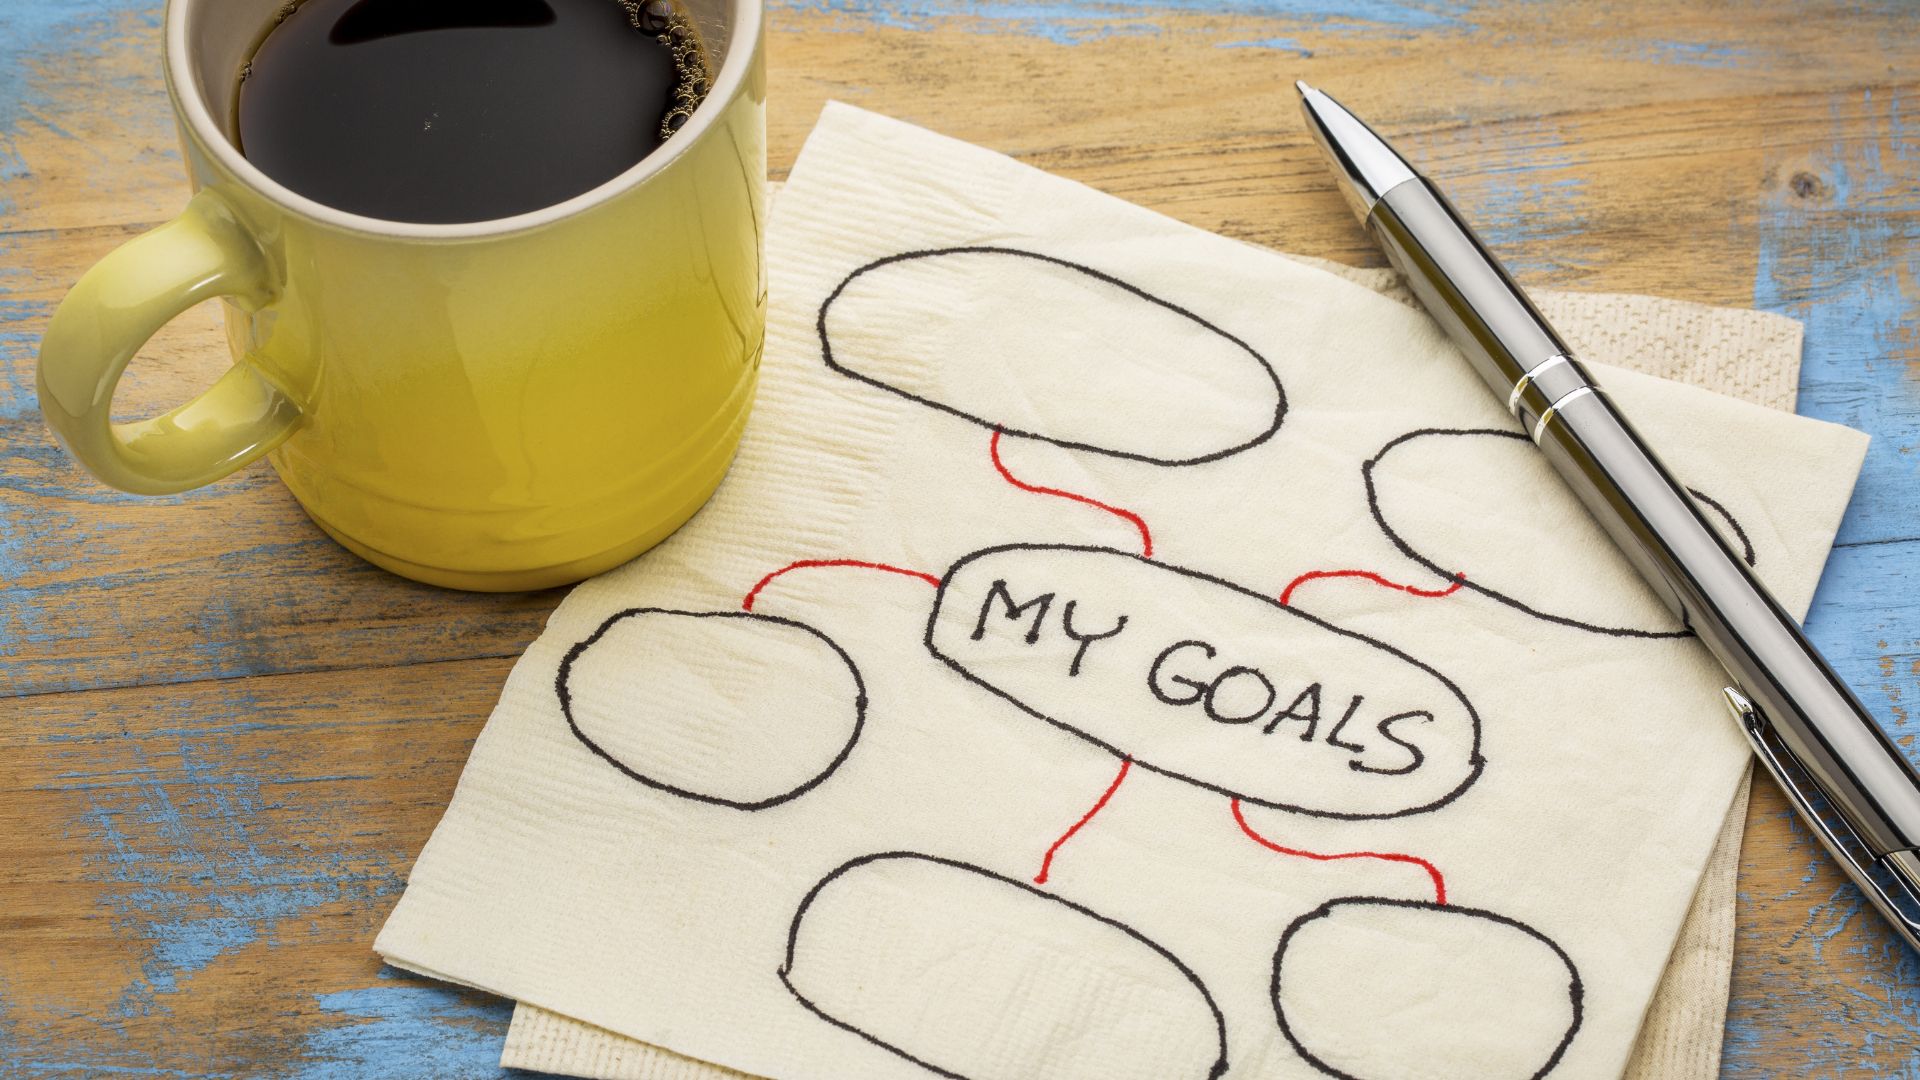 White napkin with “my goals” written in black rests under coffee mug | Setting Employee Goals